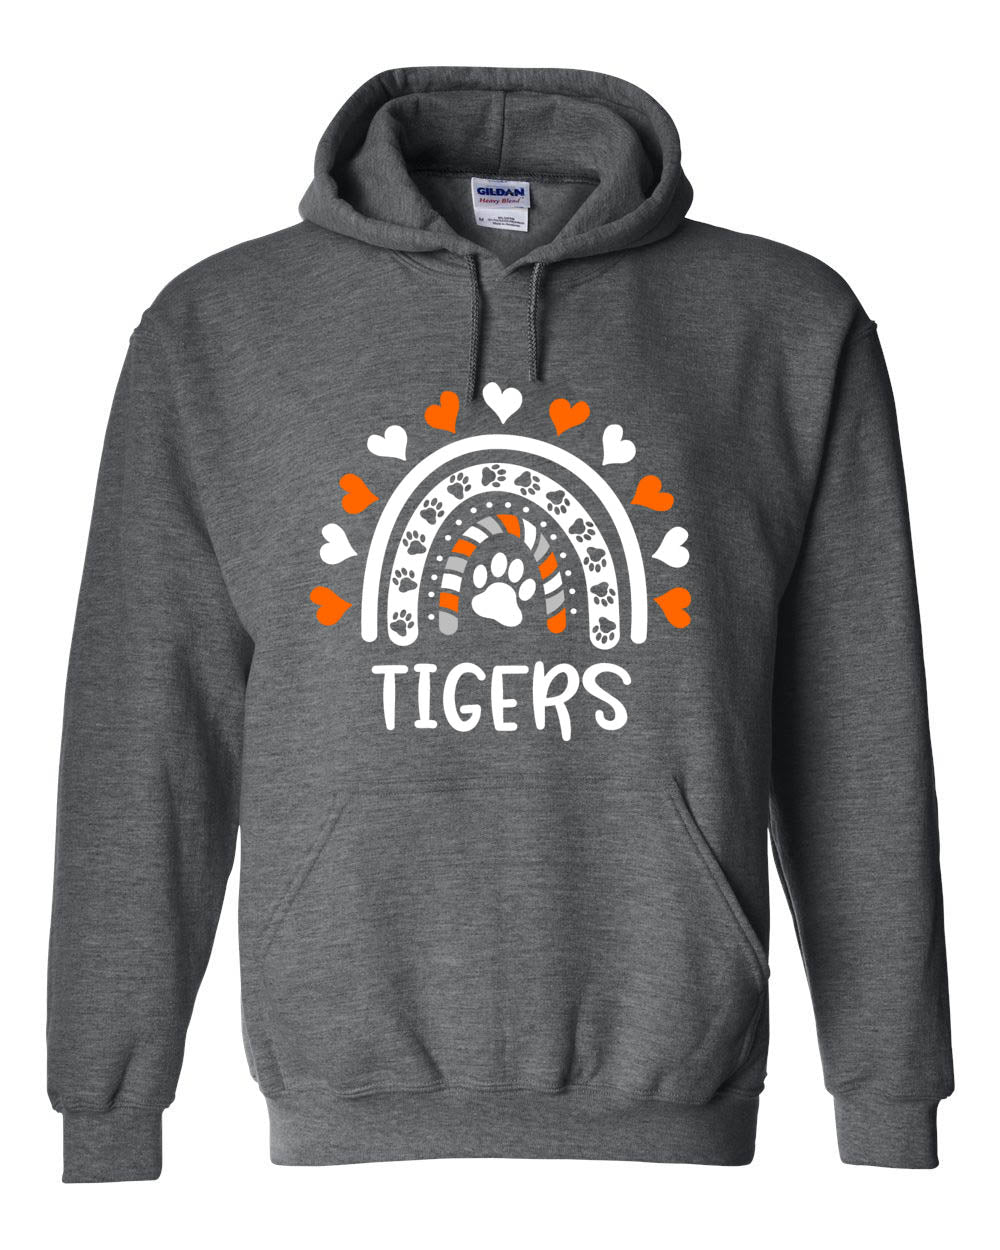 Tigers Design 4 Hooded Sweatshirt